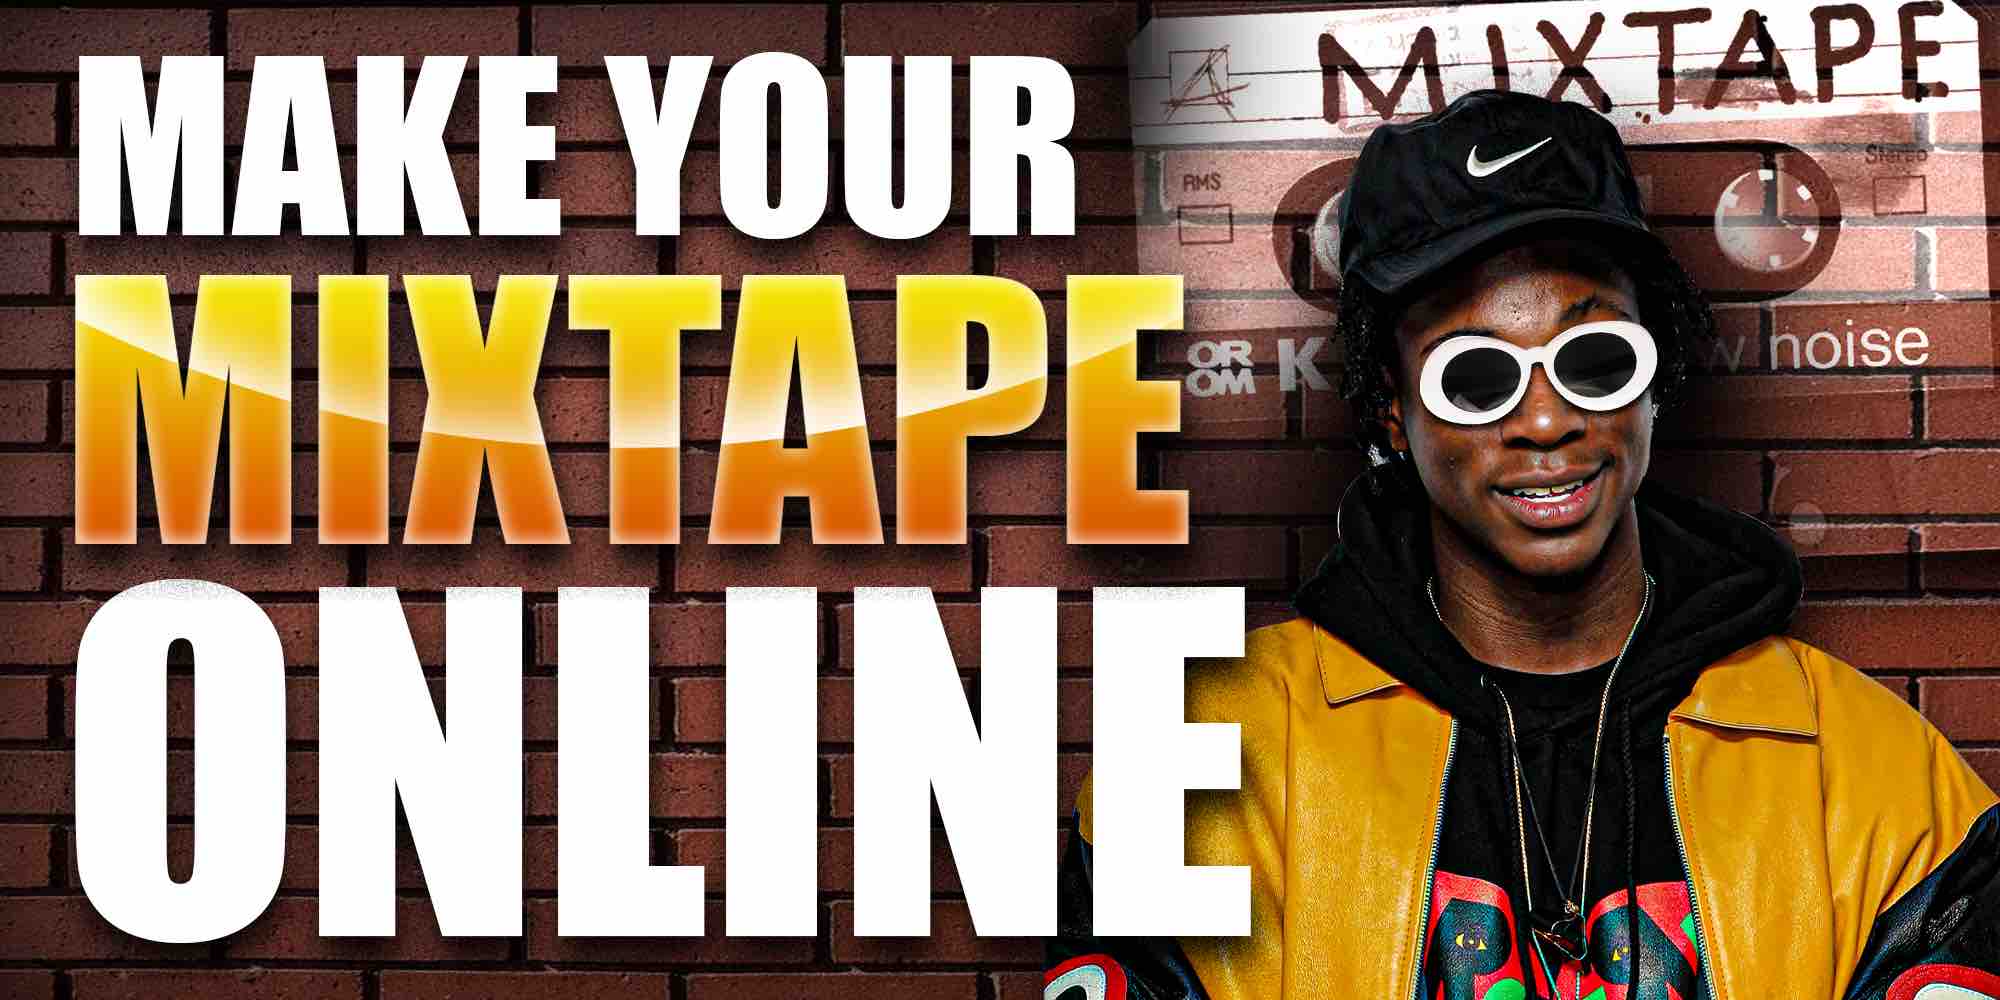 Make your mixtape online